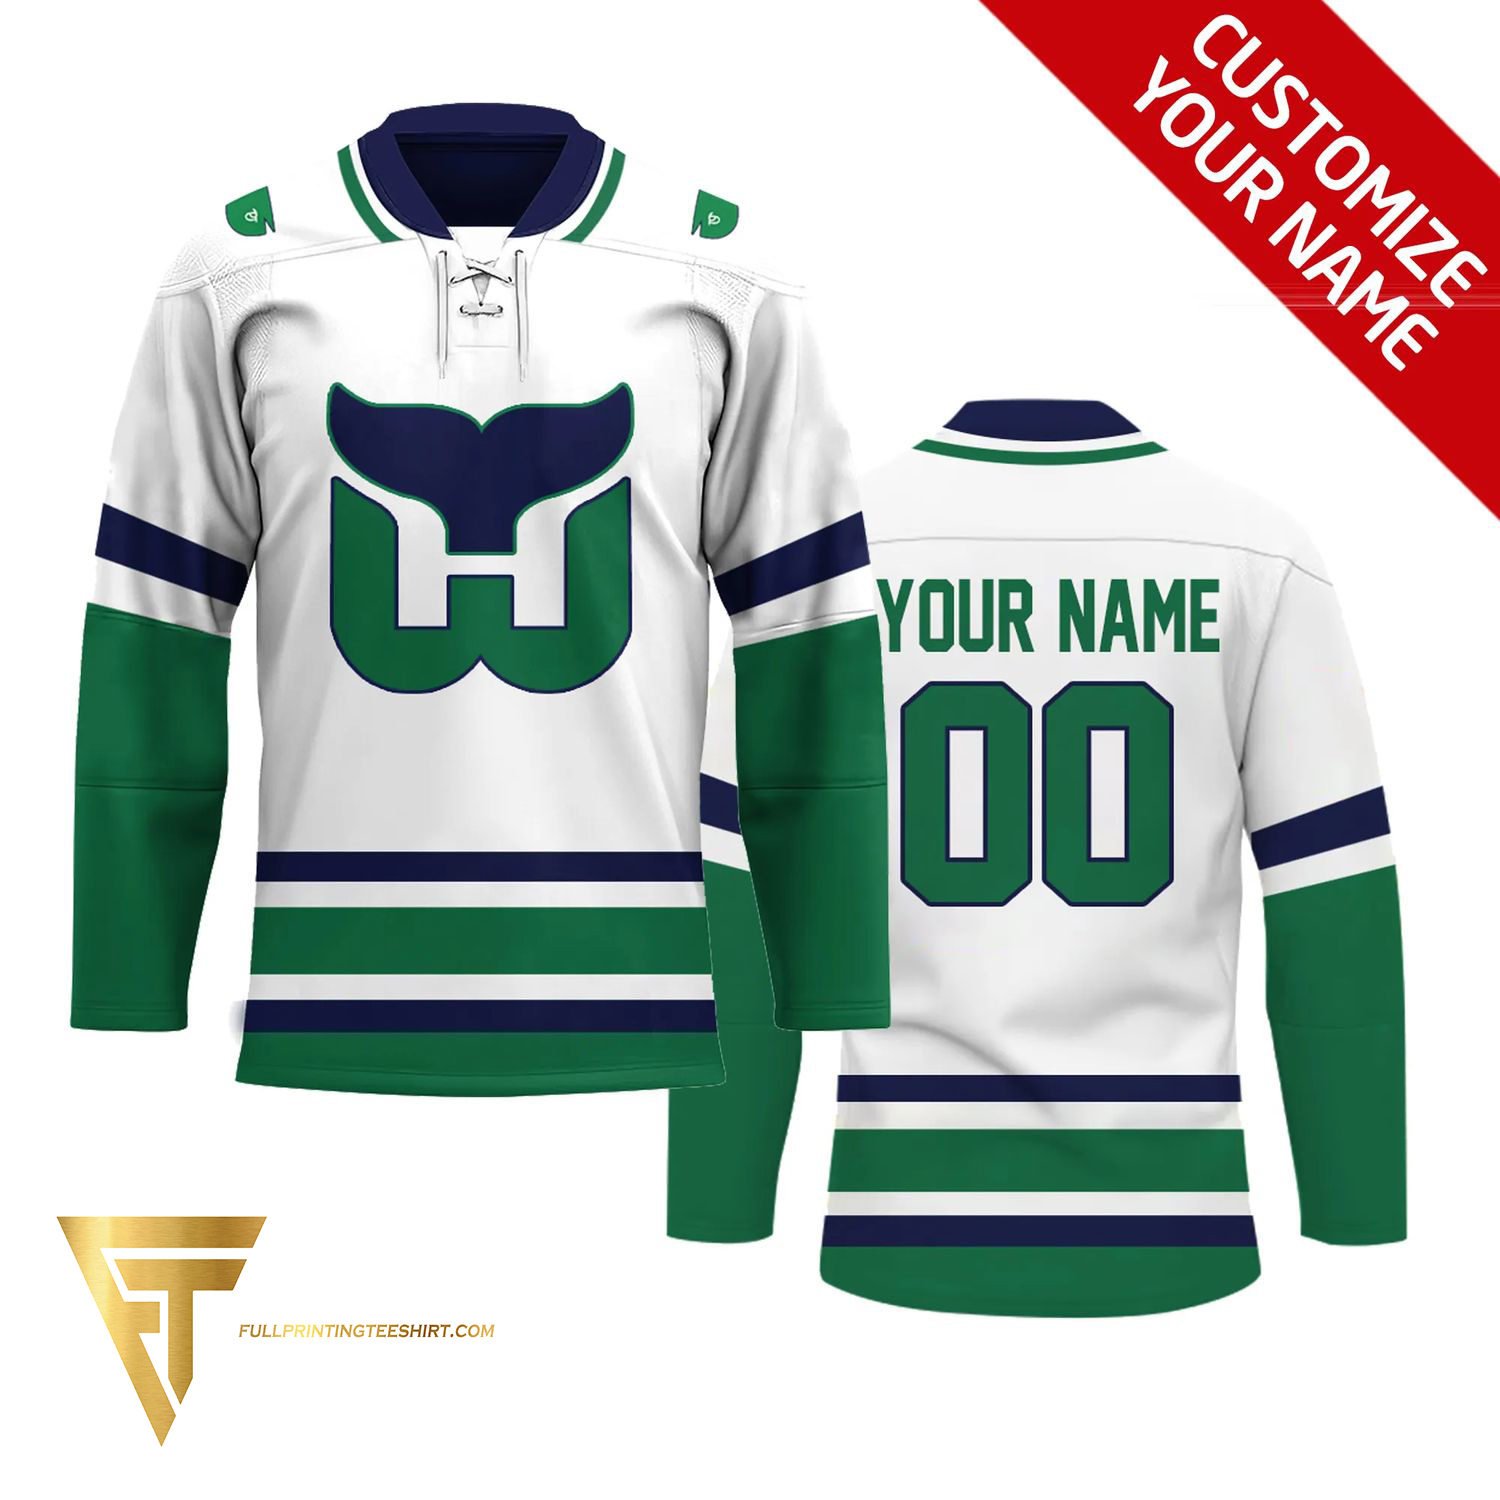 NHL Concept Series. Hartford Whalers Home Uniform.